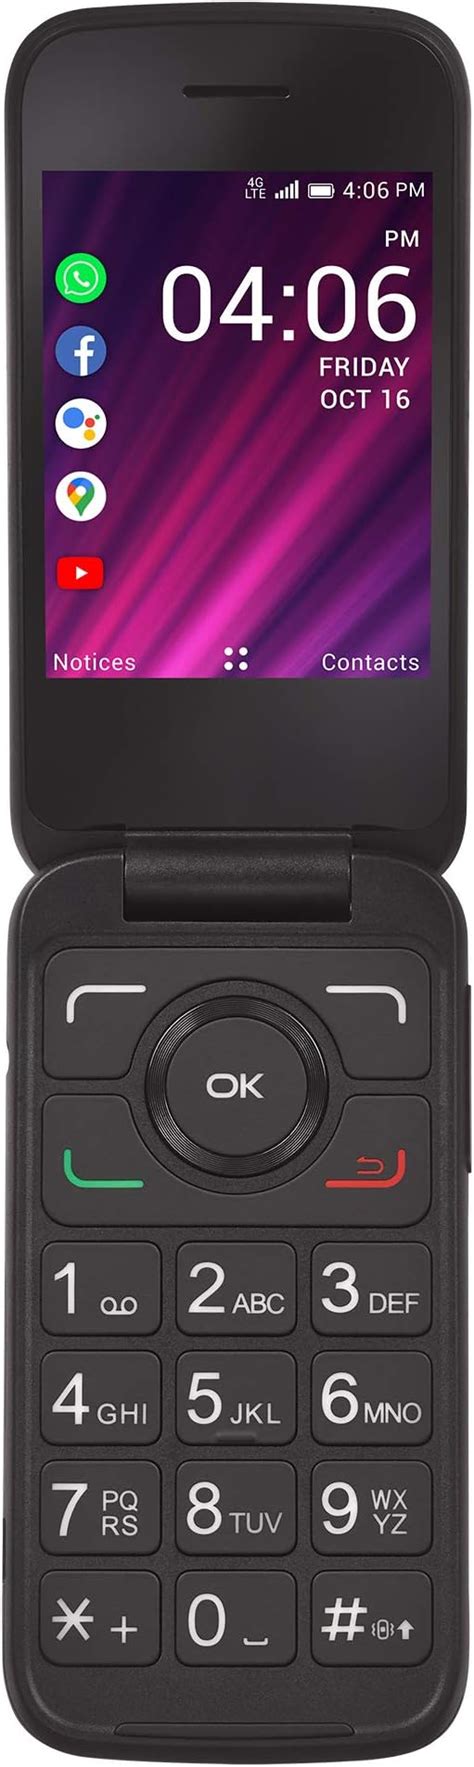 Tracfone My Flip 2 4g Lte Prepaid Flip Phone Locked Black 4gb